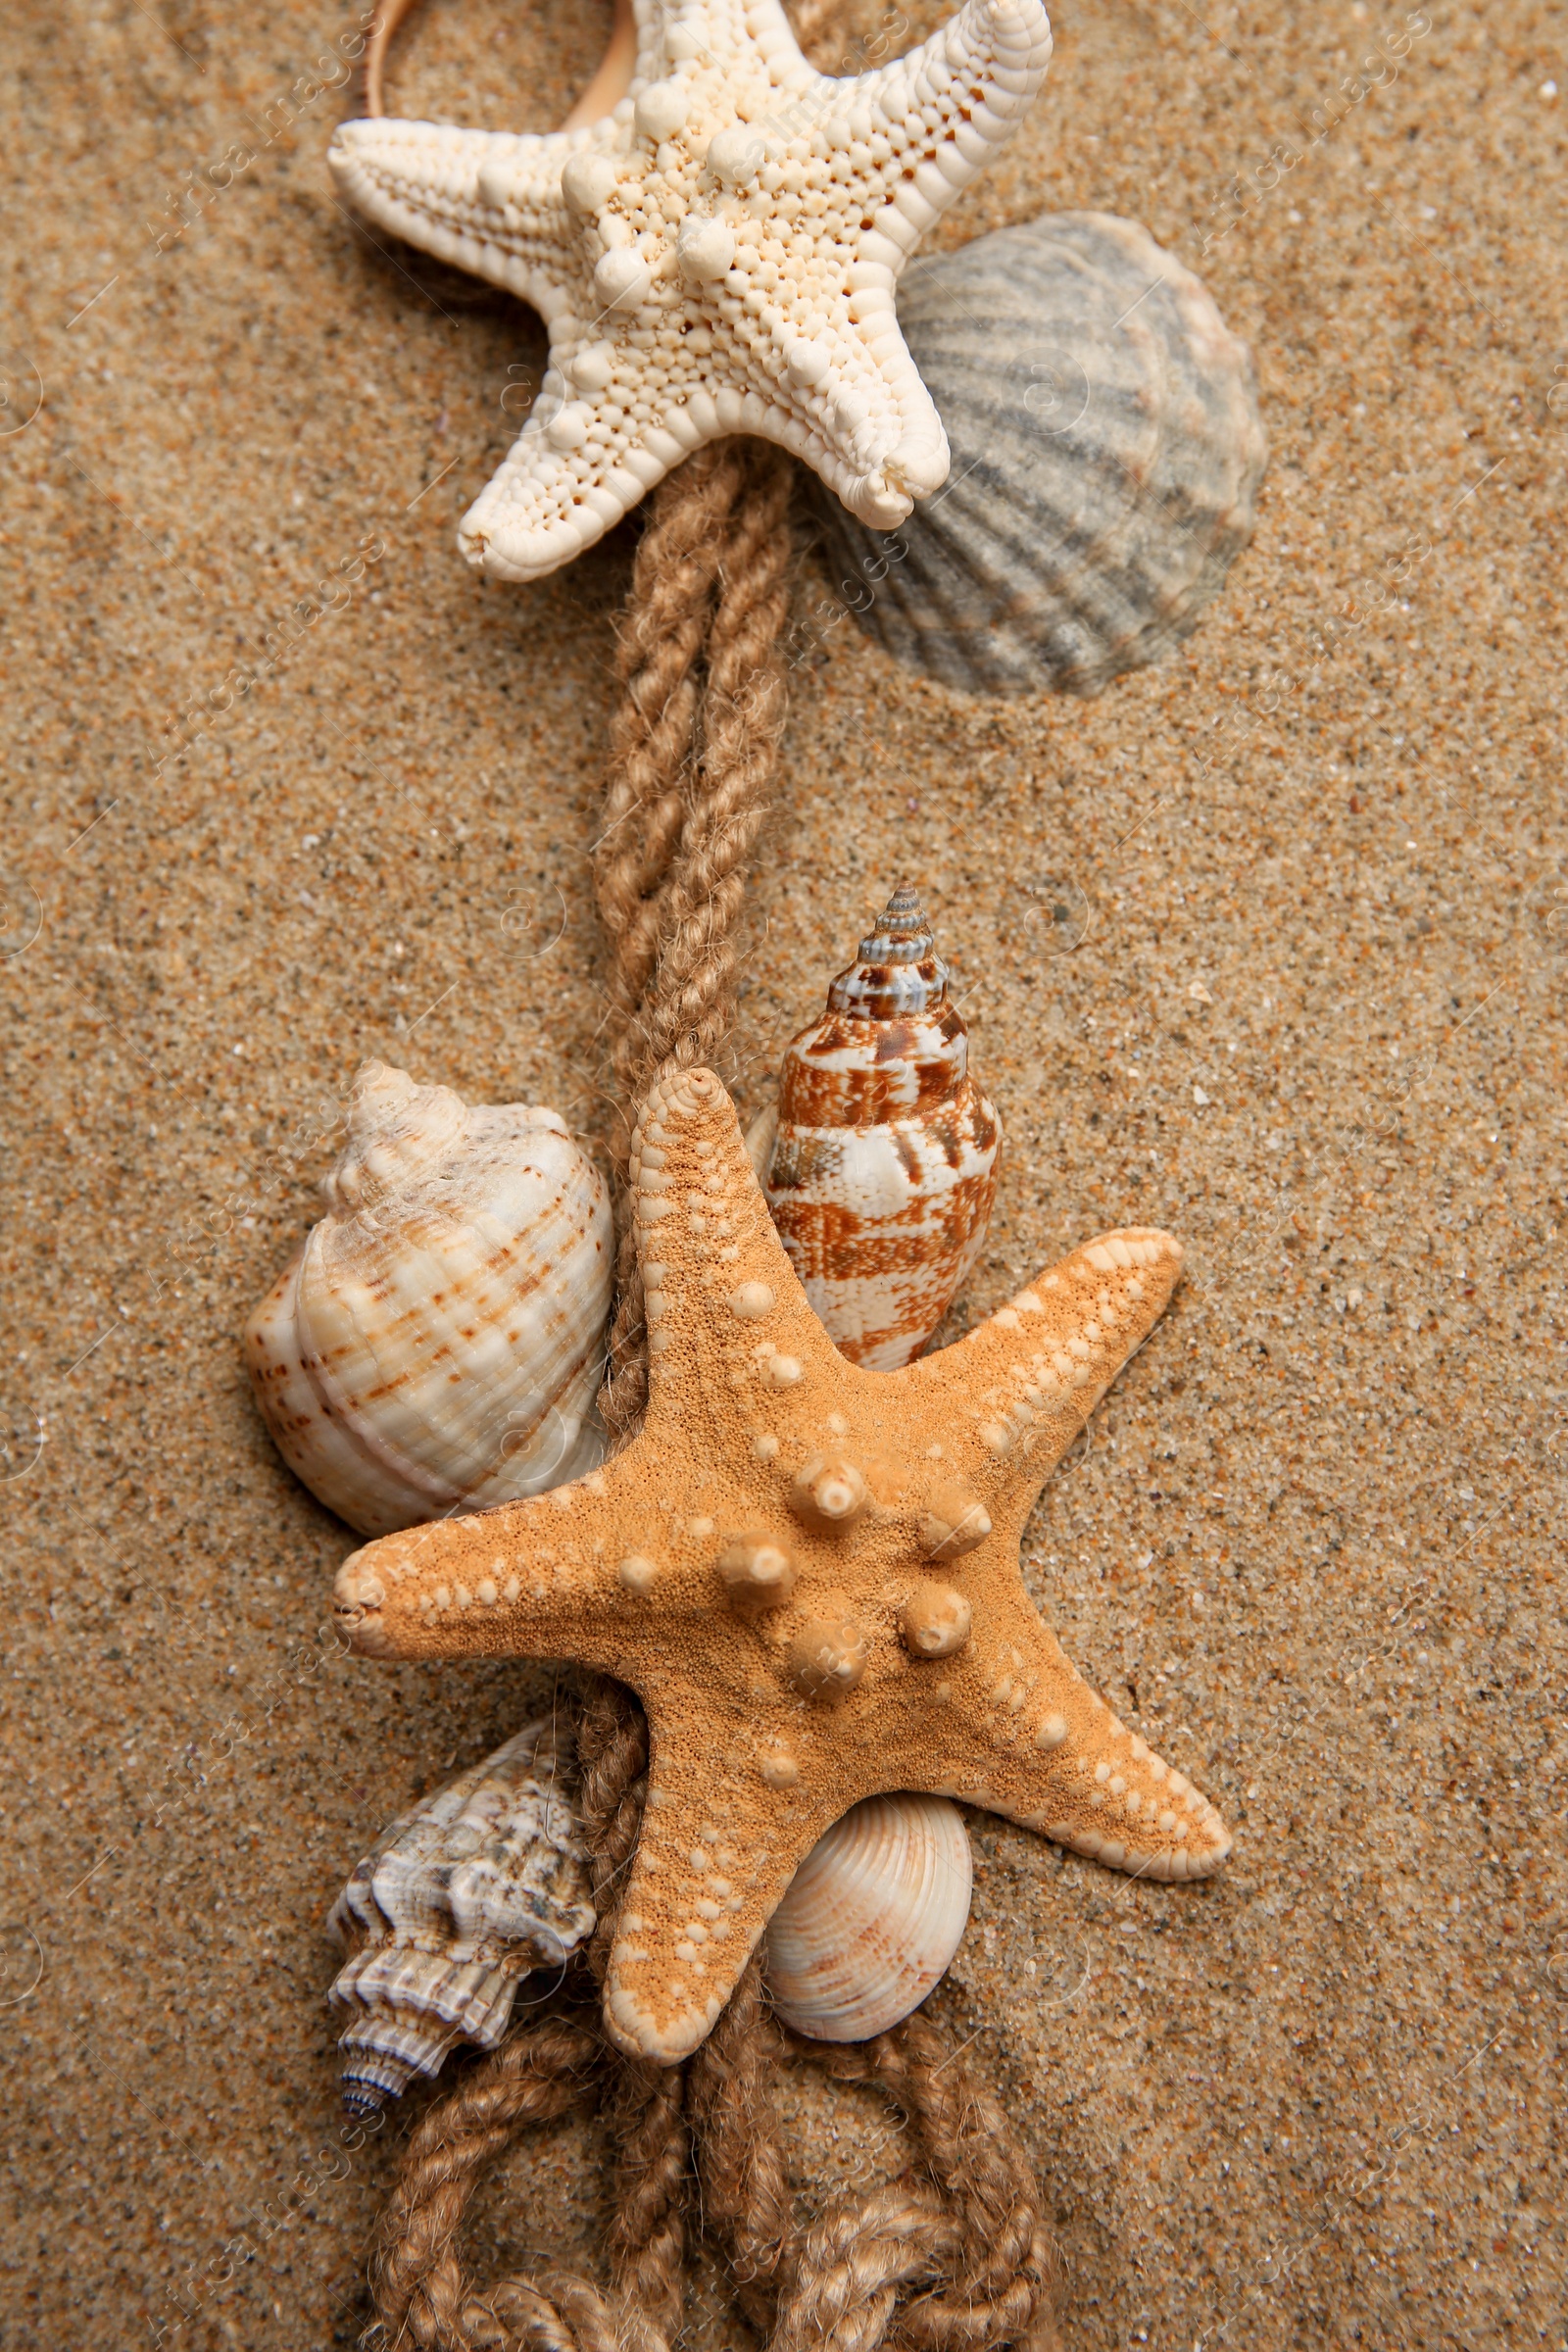 Photo of Beautiful sea stars, shells and rope on sand, flat lay